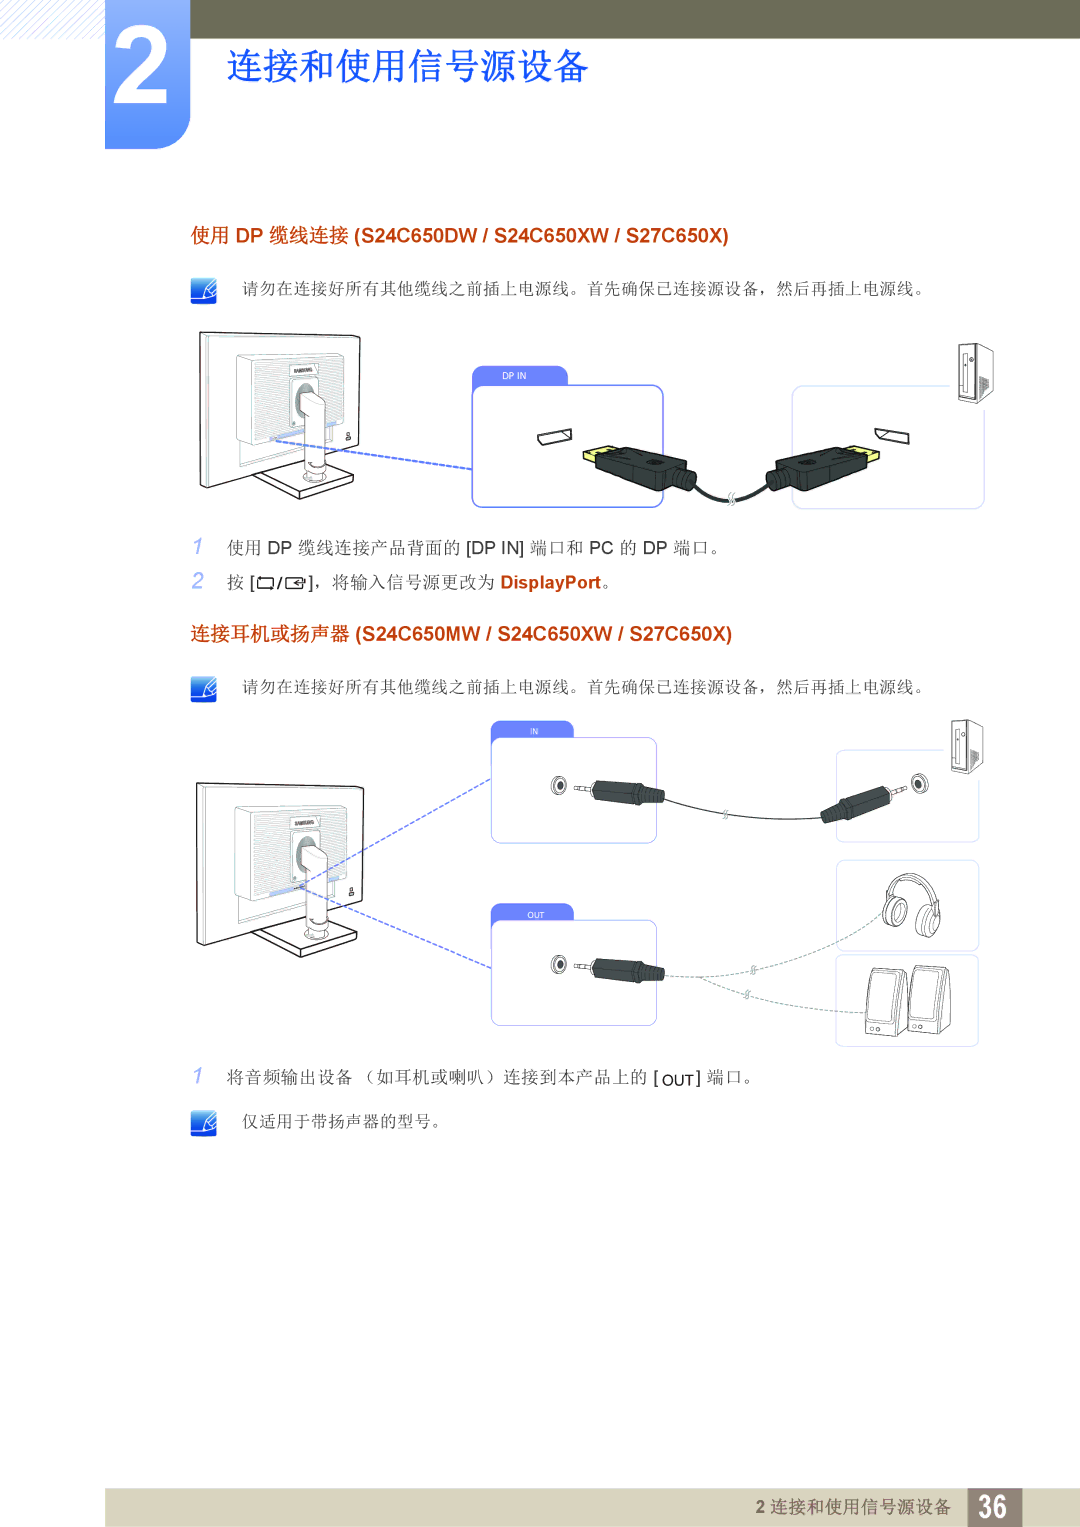 Samsung LS24C65KMWG/EN, LS27C65UXS/EN, LS24C65UXWF/EN, LS24C65KBWV/EN manual 使用 DP 缆线连接 S24C650DW / S24C650XW / S27C650X 